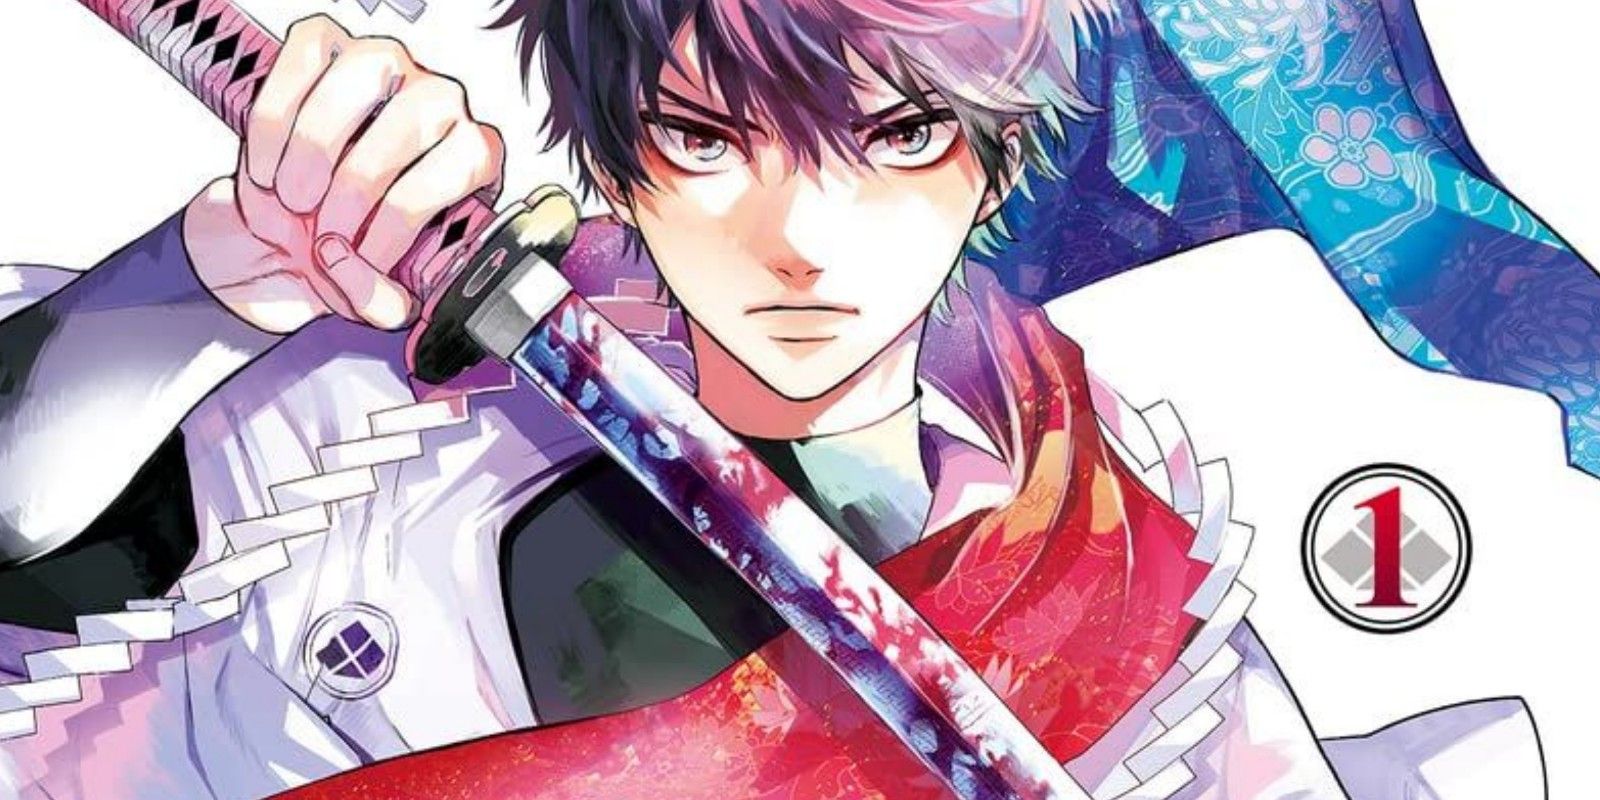 Does Bakugo Die in the 'My Hero Academia' Manga?